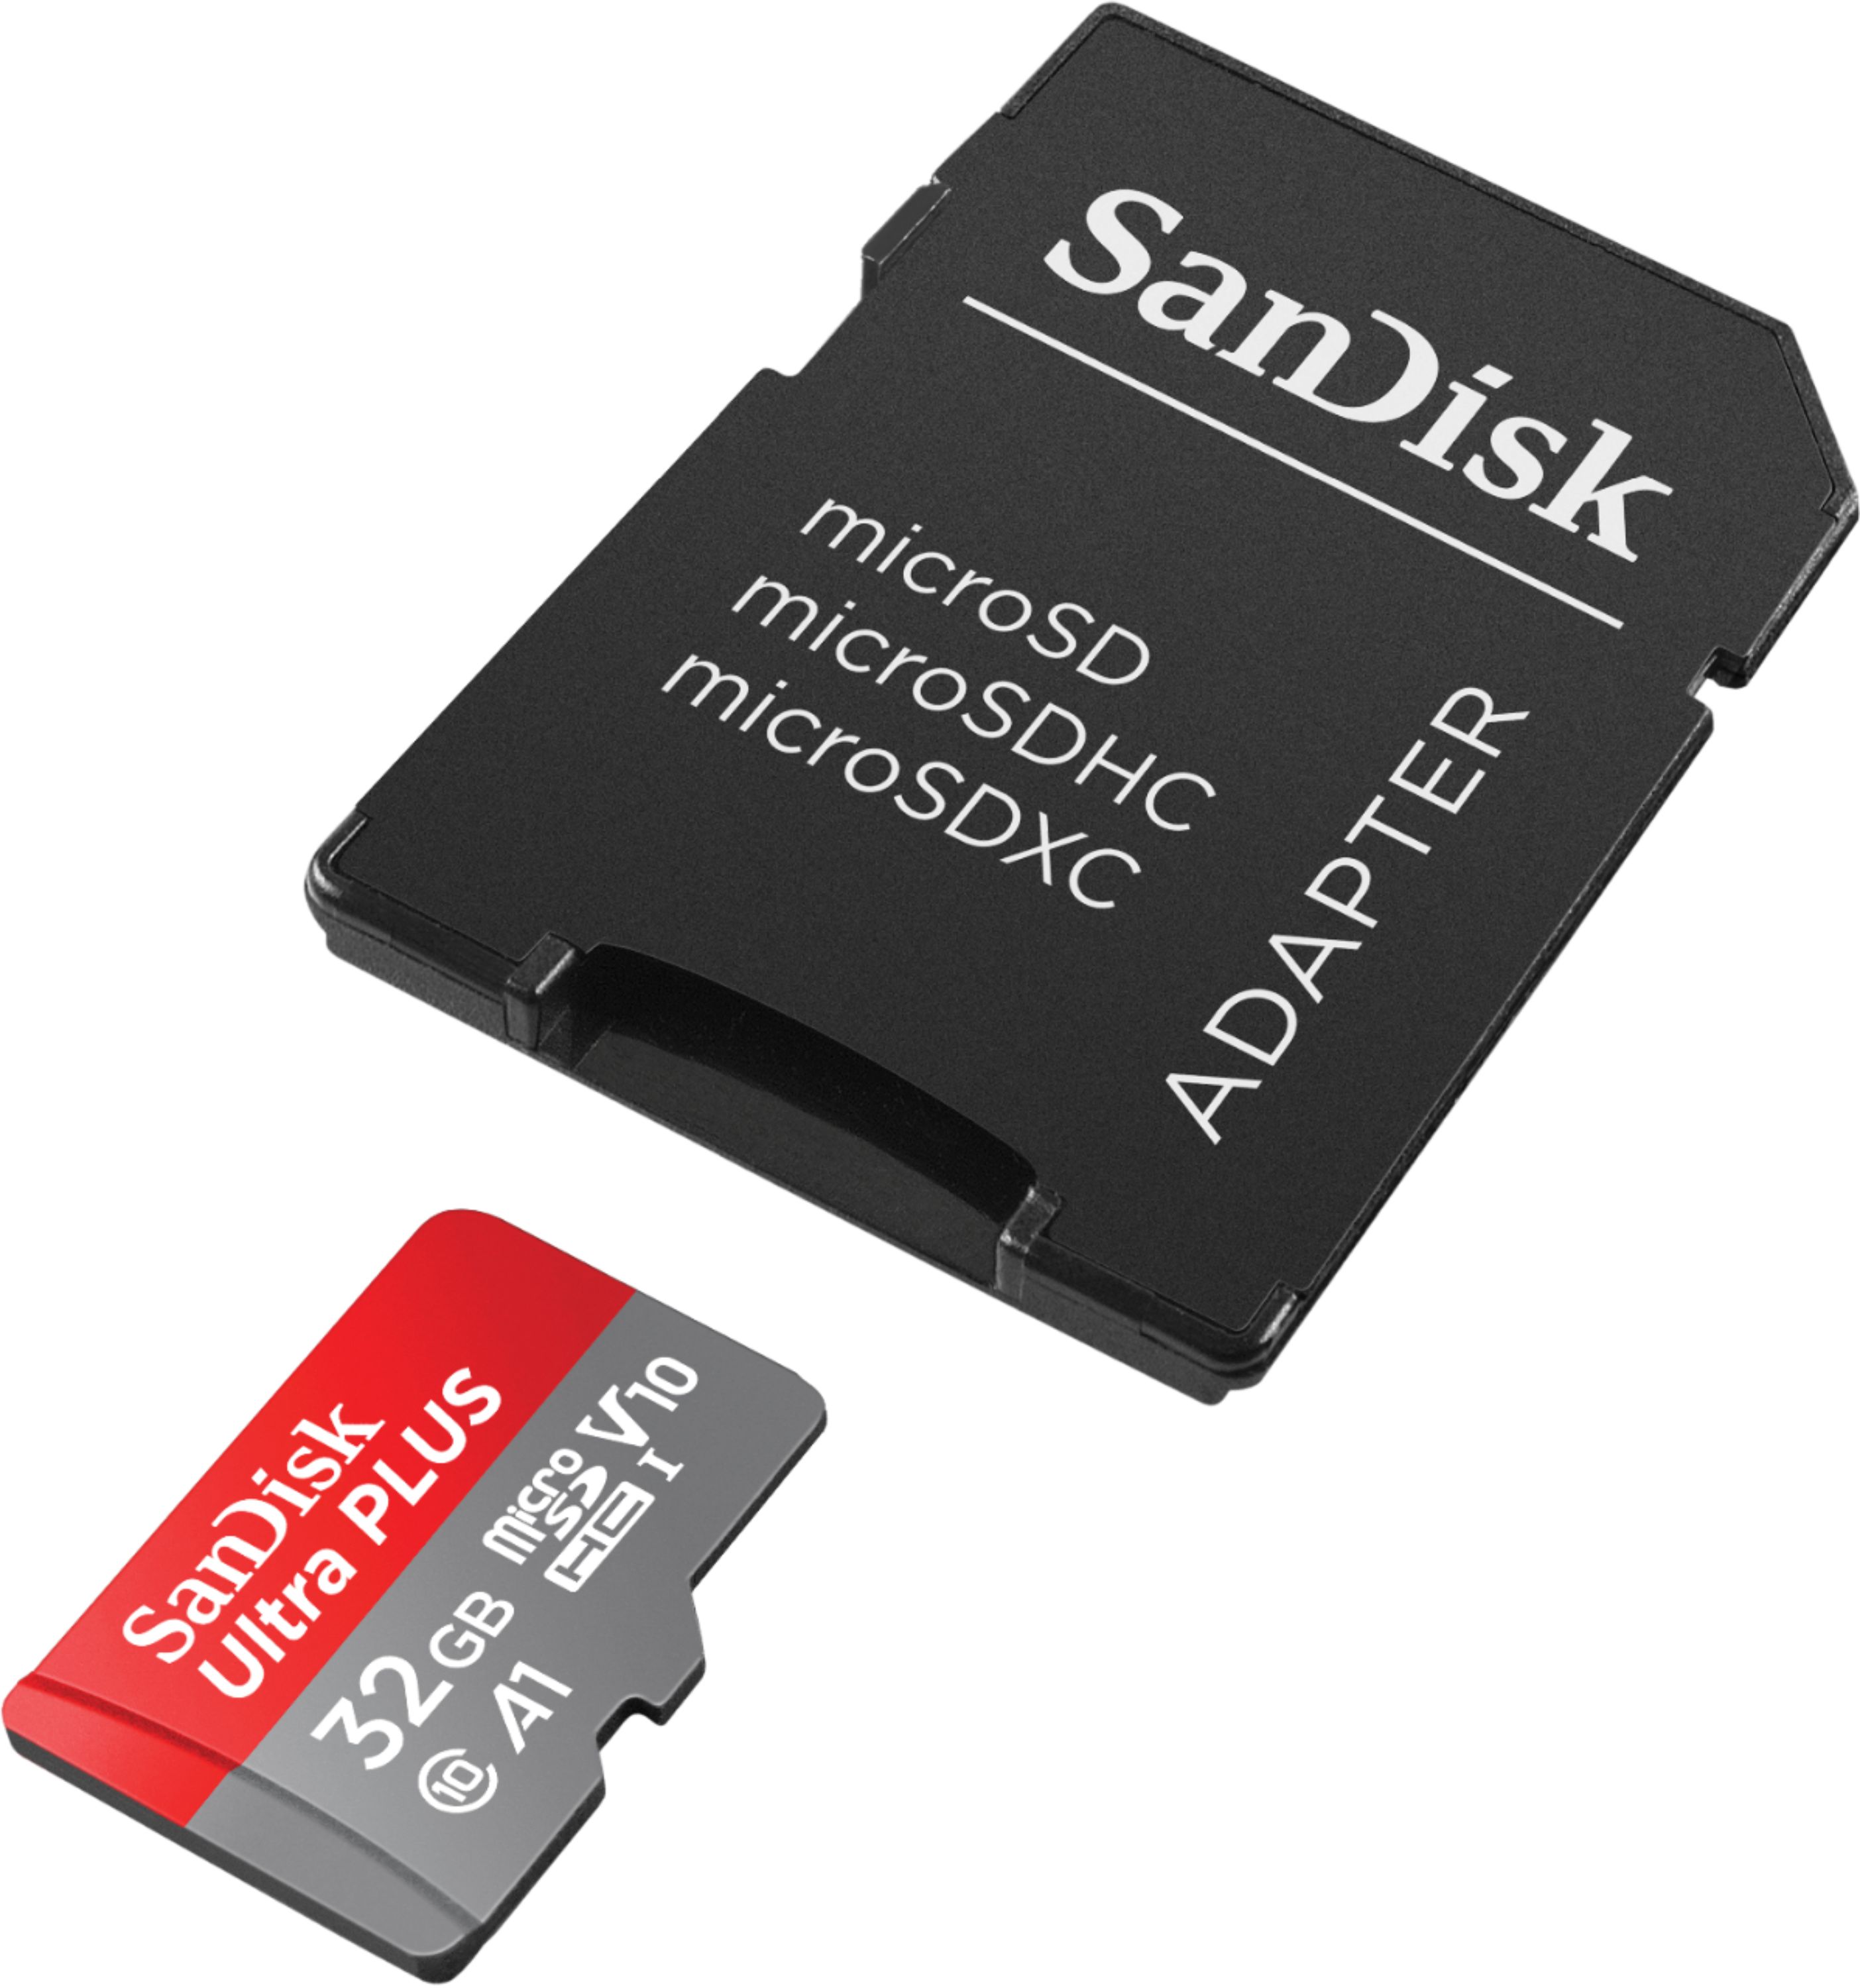 SanDisk Ultra SDHC UHS Card, 32GB